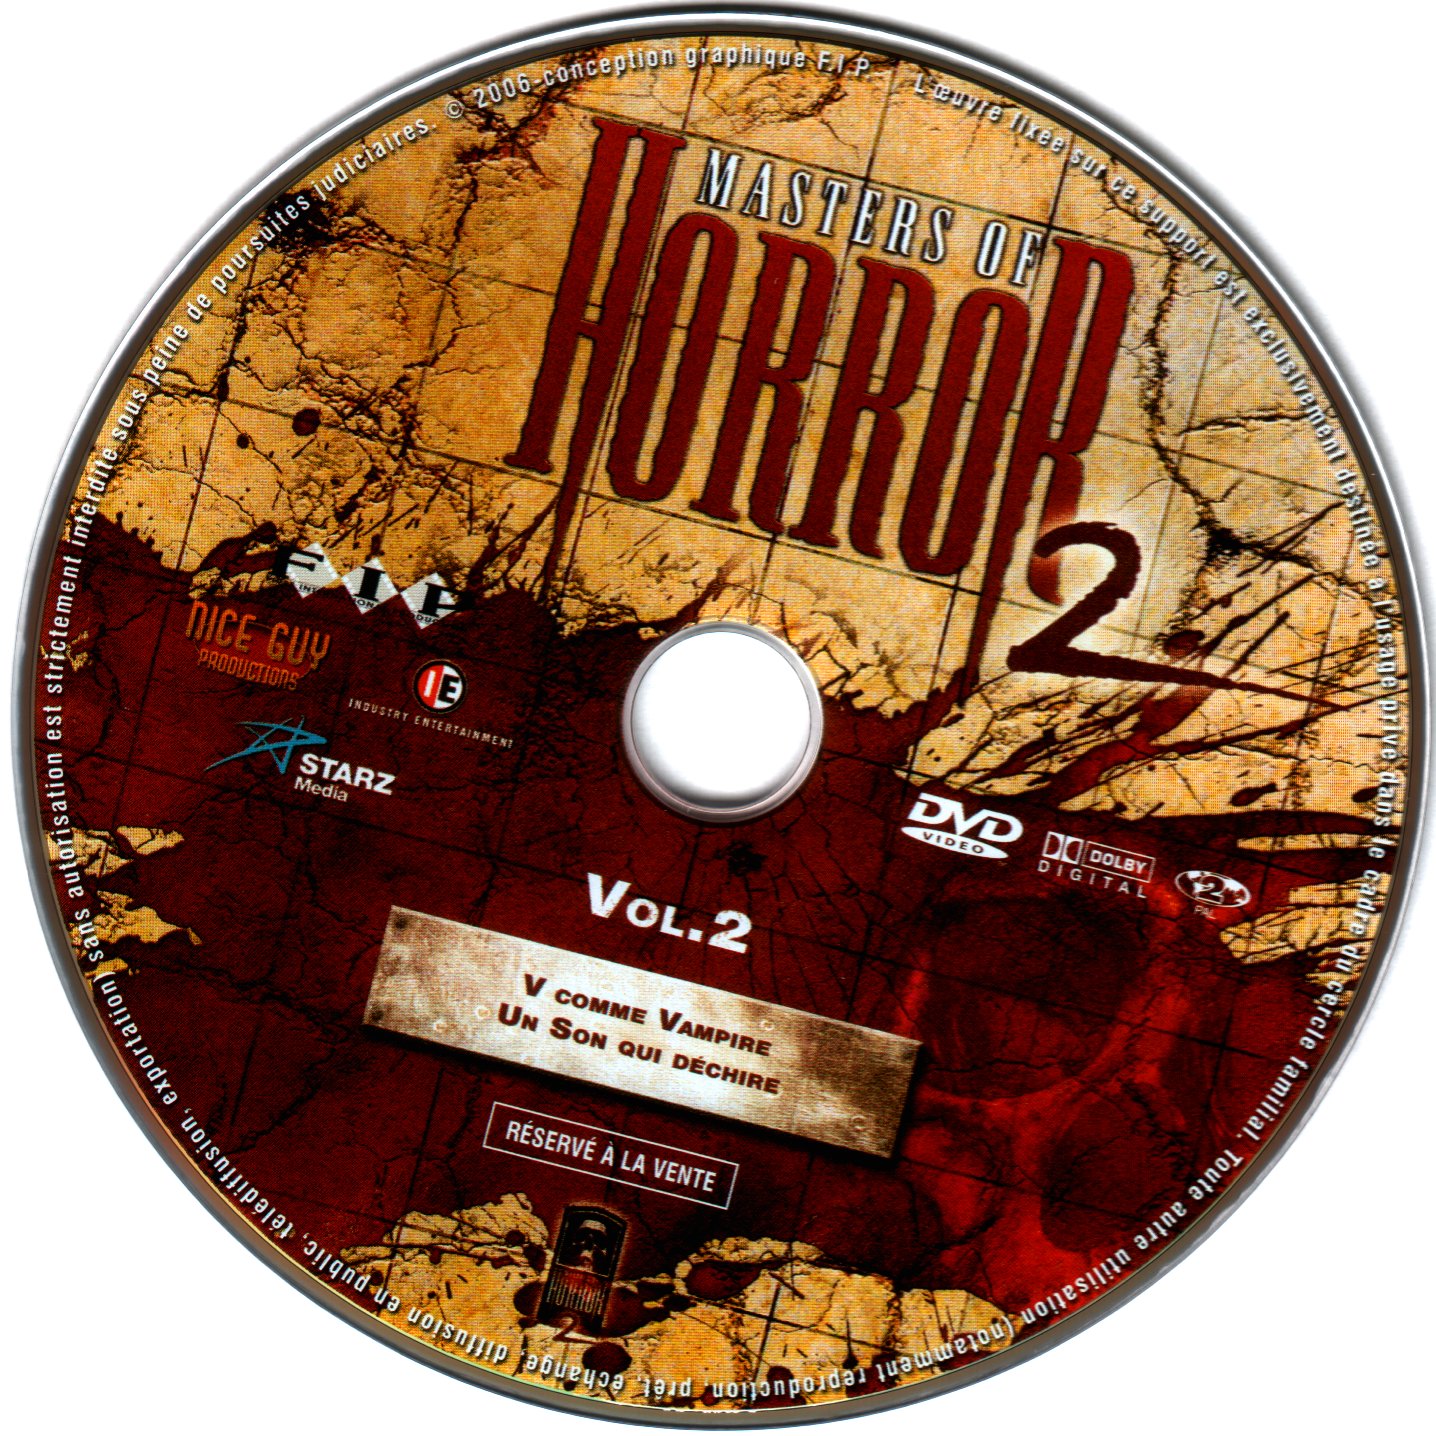 Masters of horror Saison 2 vol 2